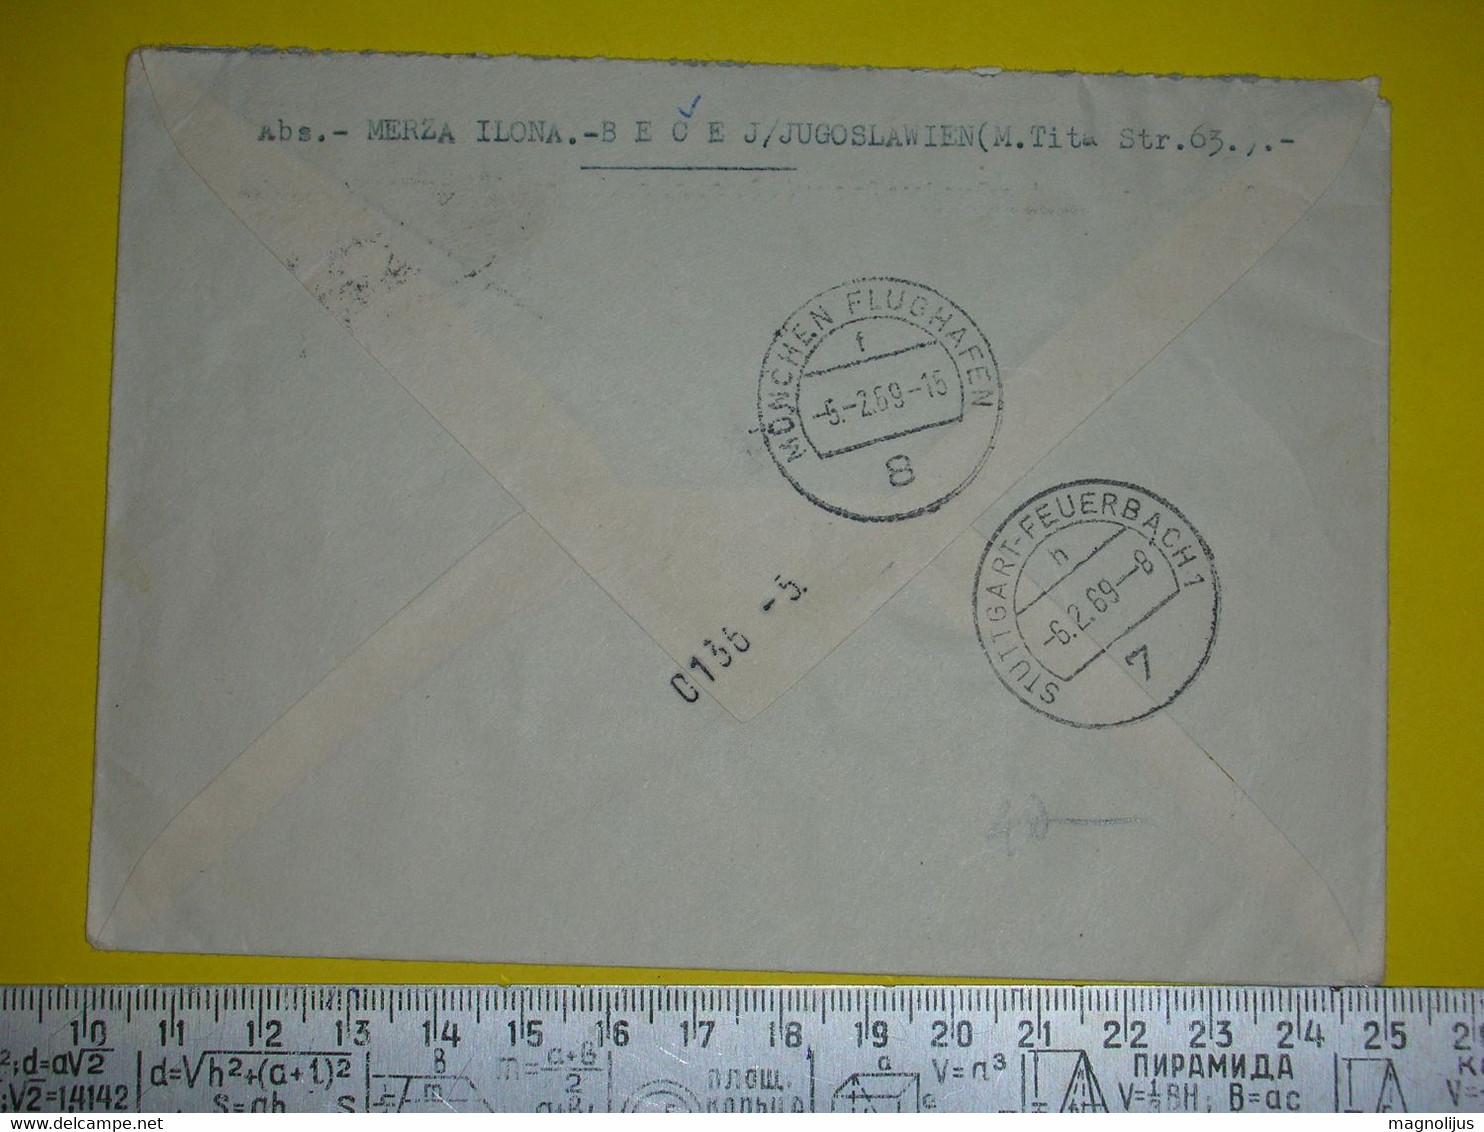 R,Yugoslavia Air Mail Cover,par Avion Postal Label,Tito Stamps,Airmail Letter,R & Urgent Postal Labels,rare Violet Seals - Luftpost